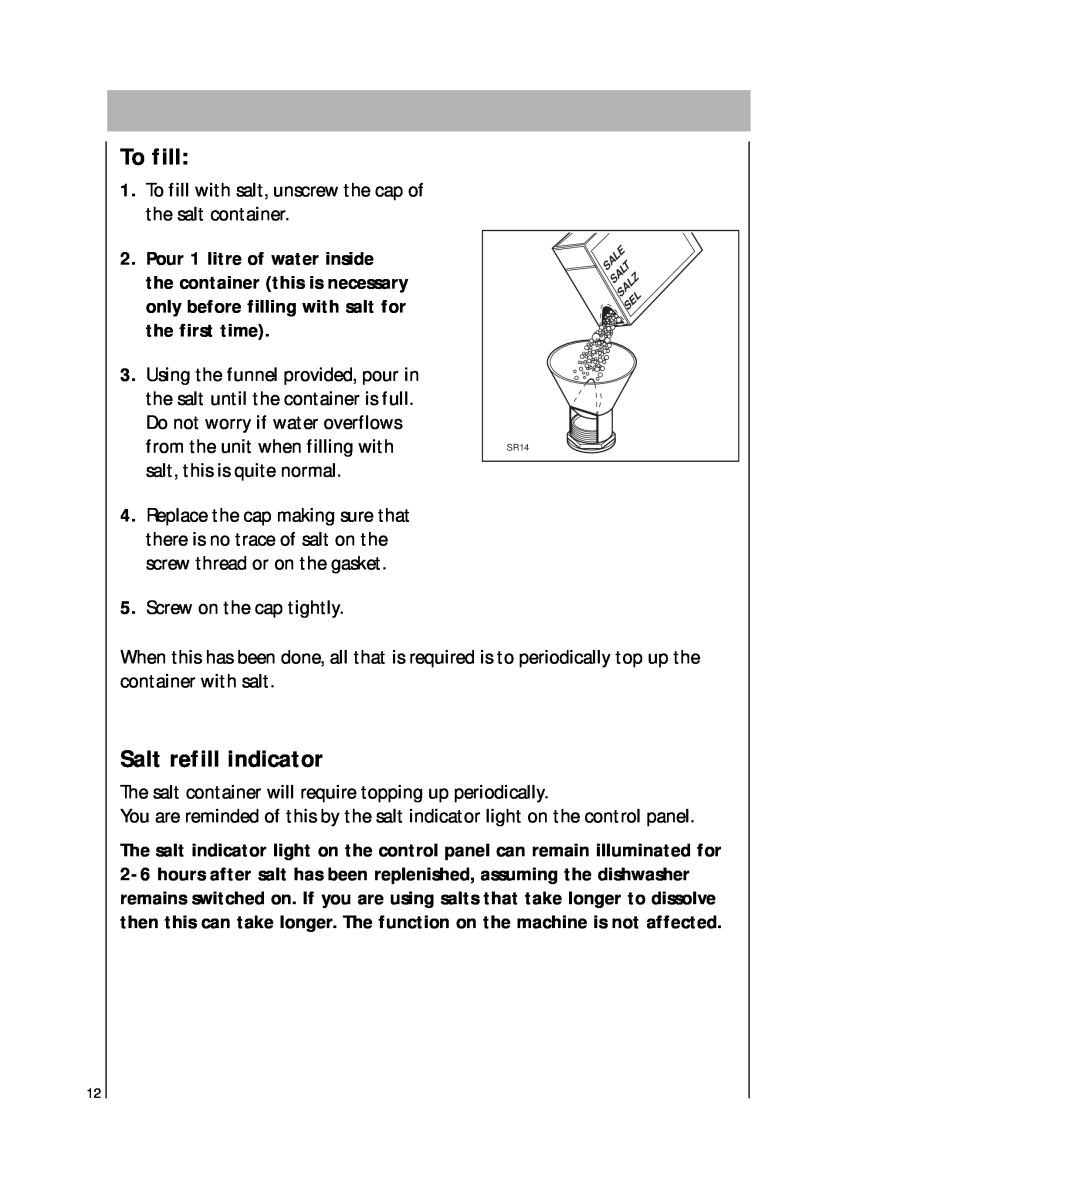 AEG 2807 manual To fill, Salt refill indicator 